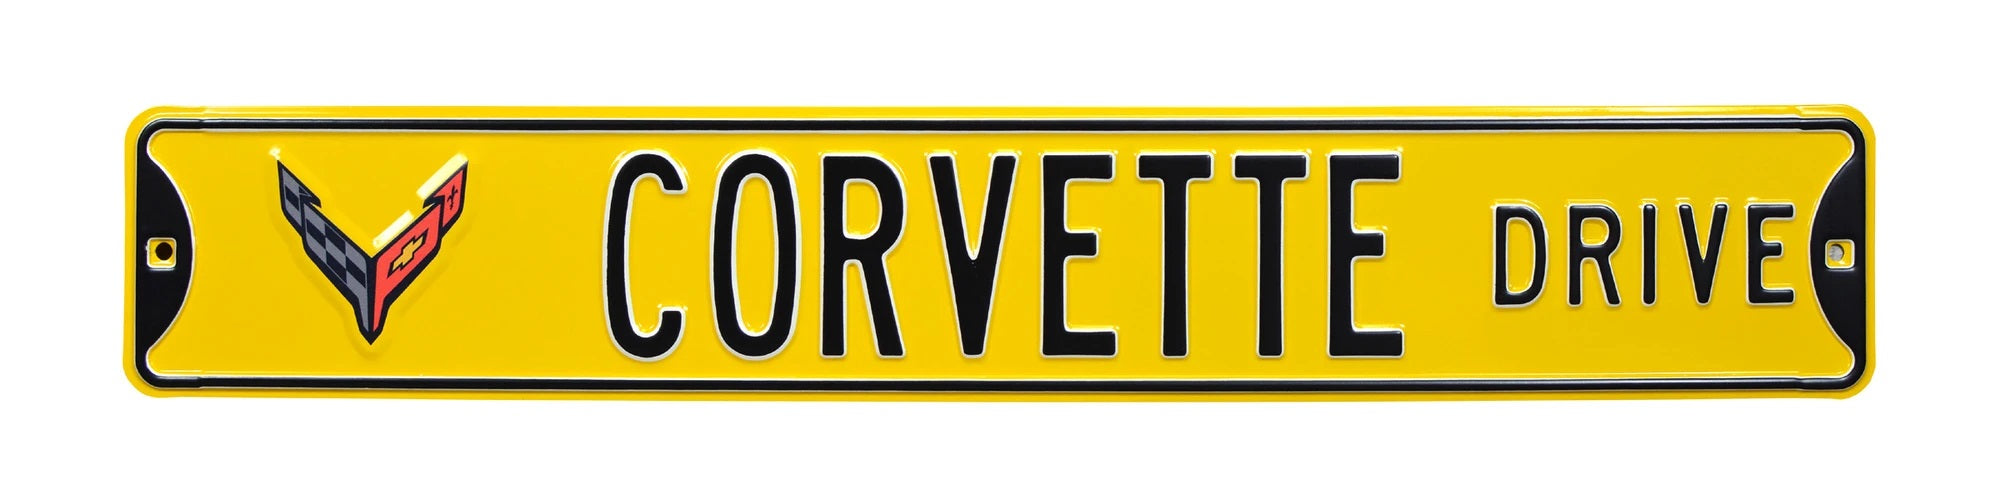 C8 Corvette Drive Yellow Steel Sign